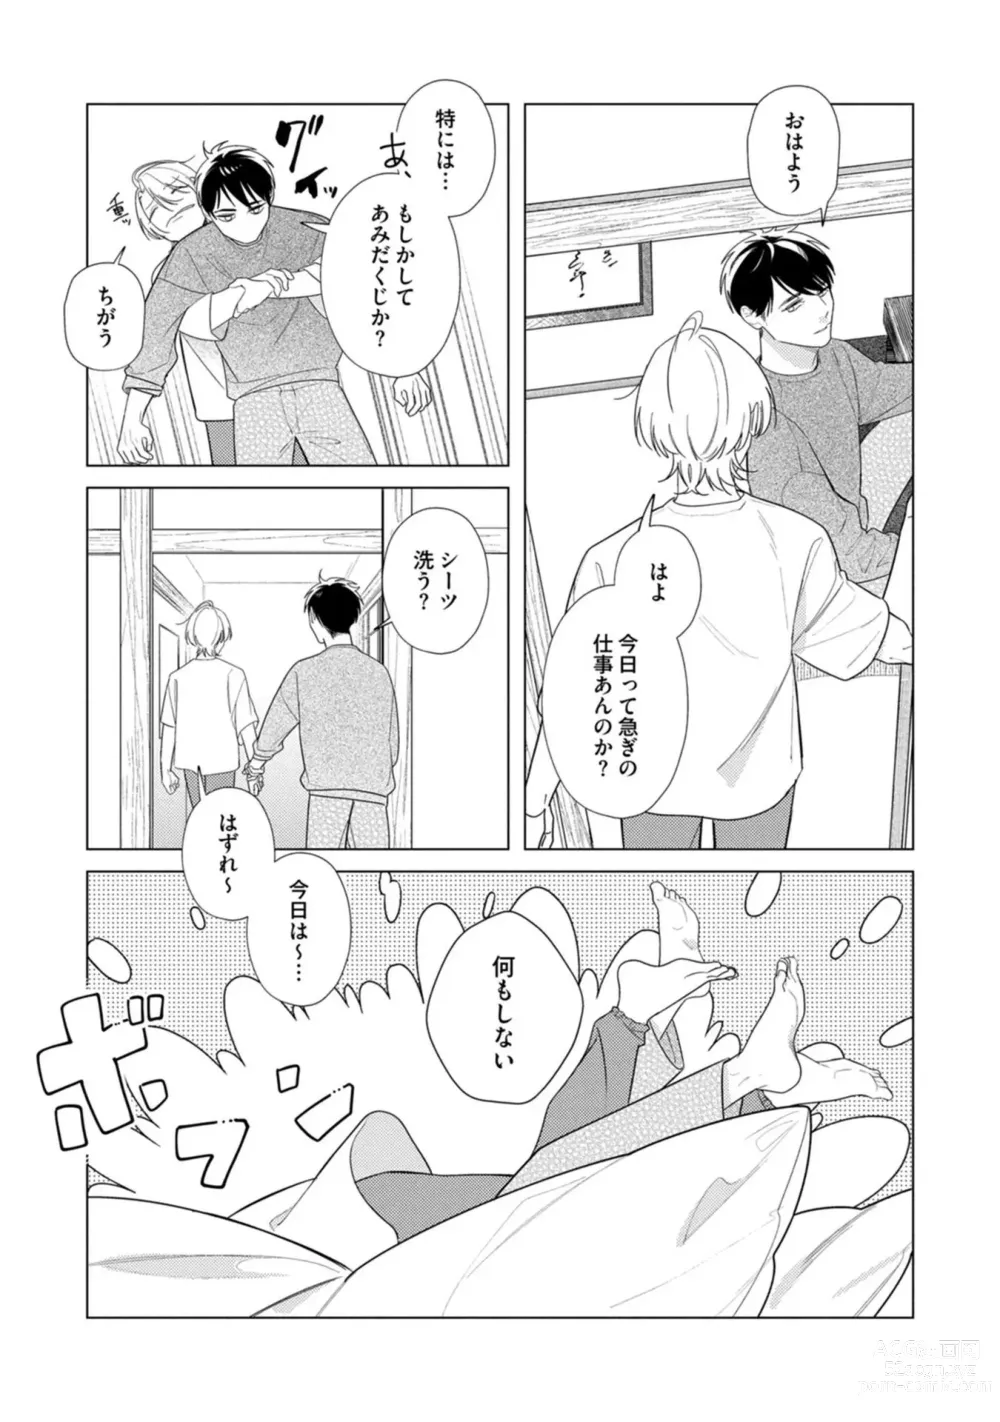 Page 159 of manga Yoru mo, Asa mo